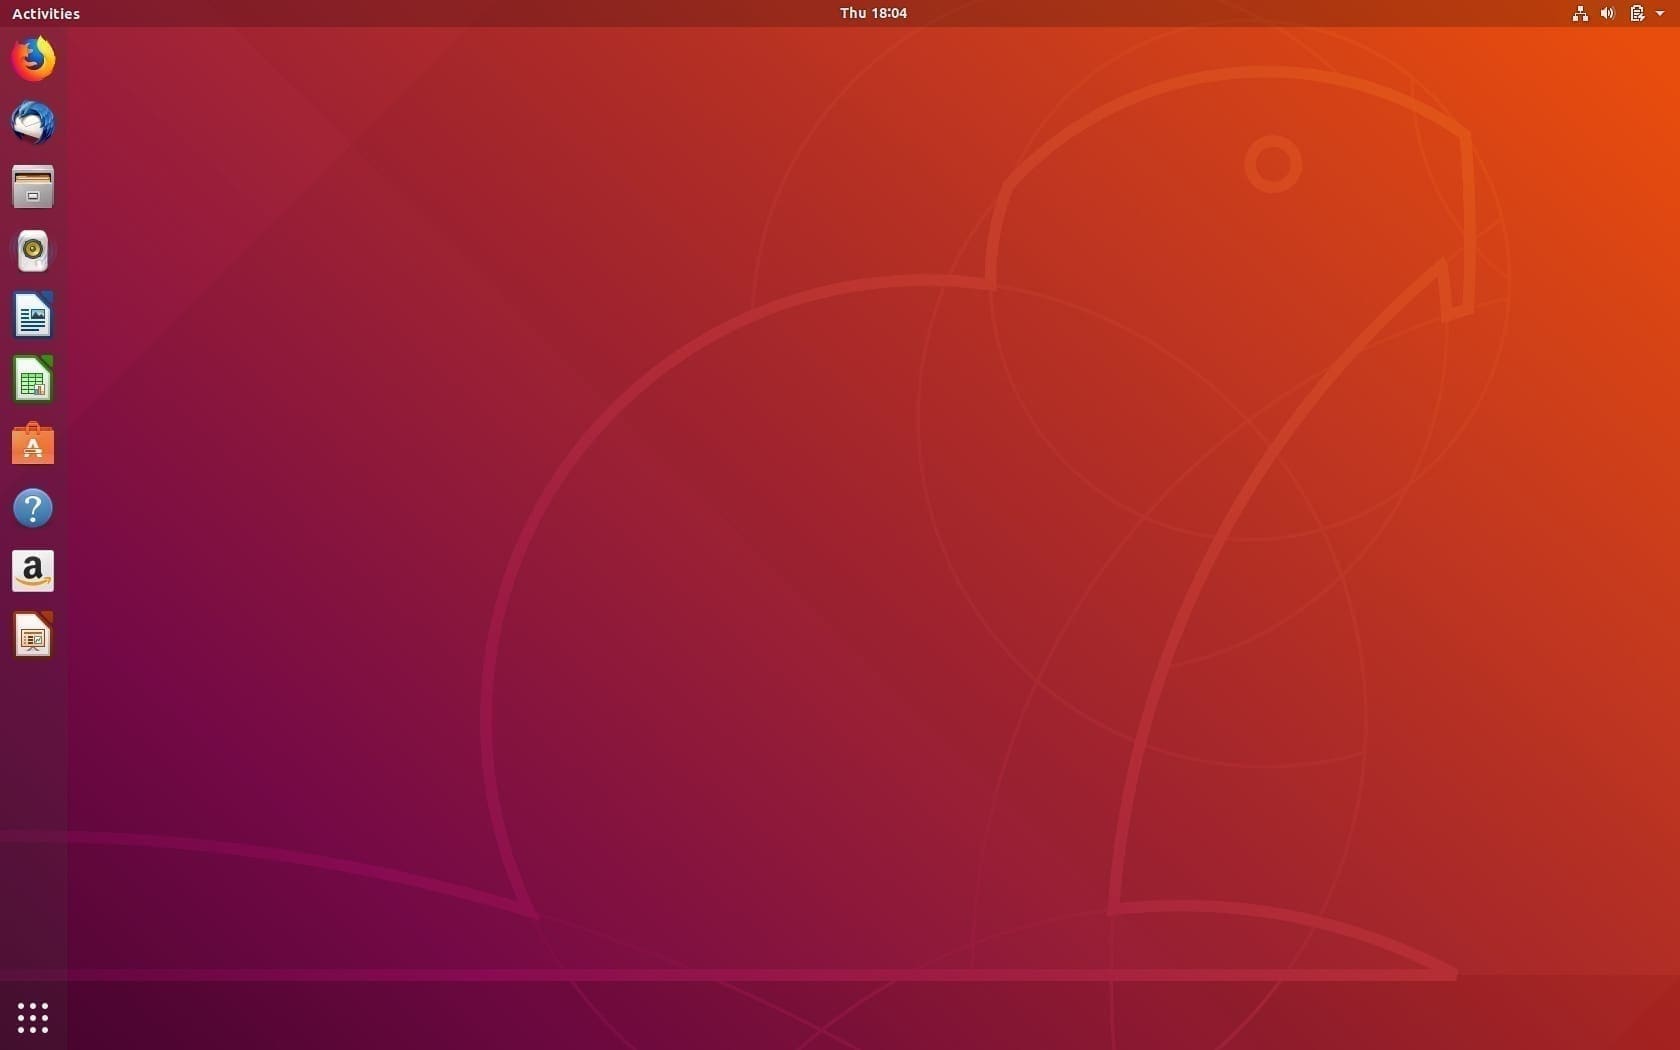 Ubuntu default interface